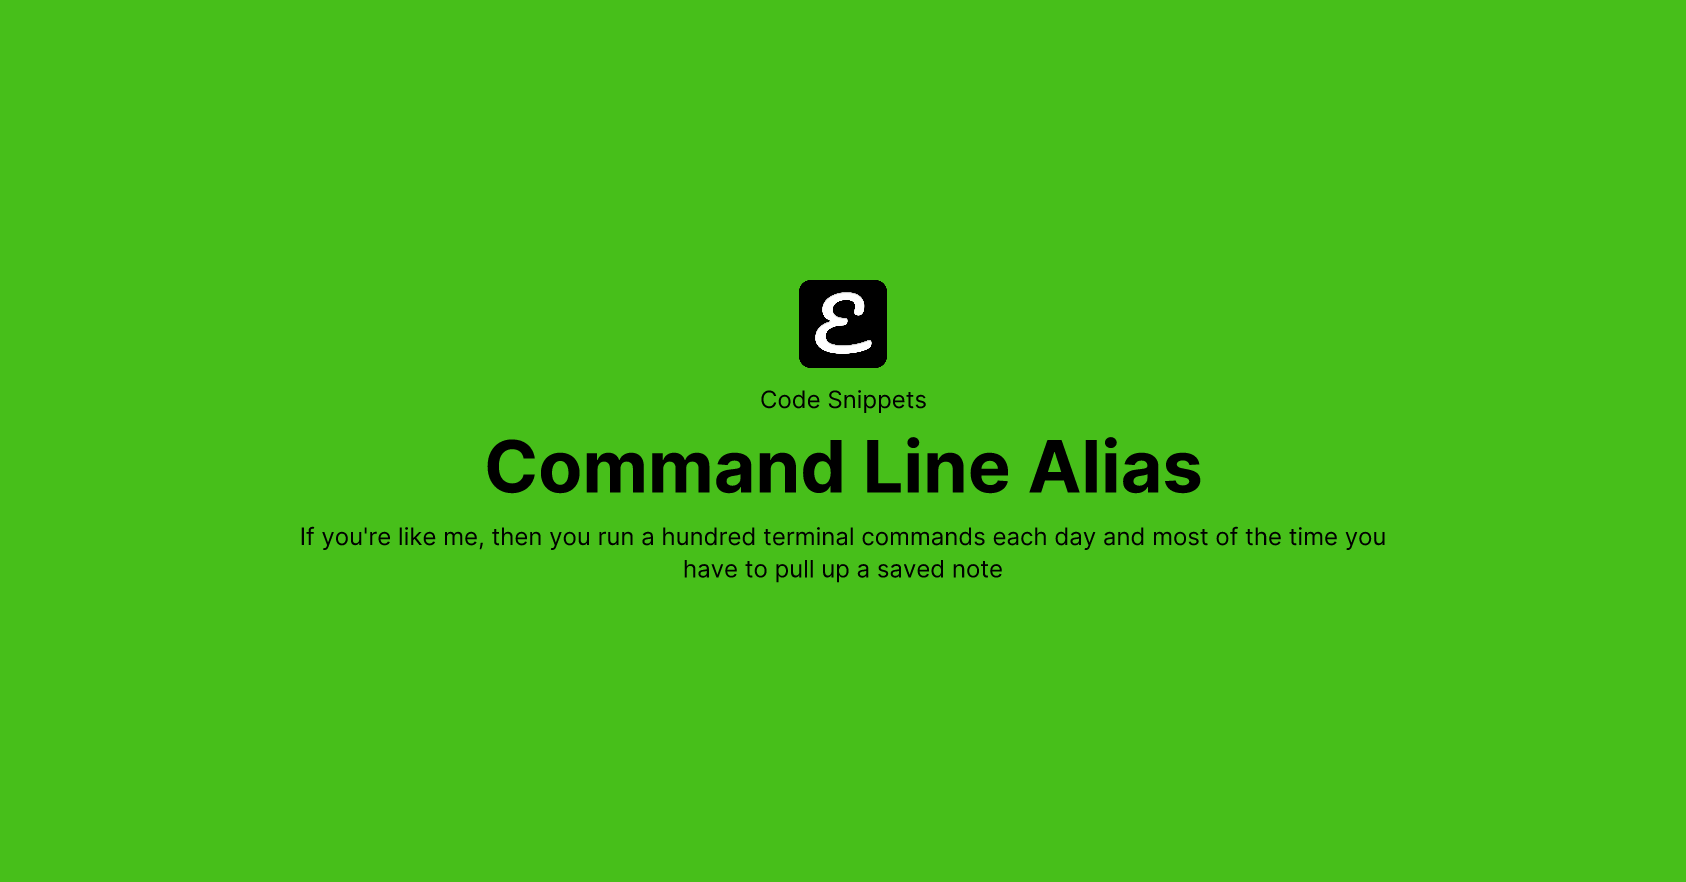 Command Line Alias by Eric David Smith